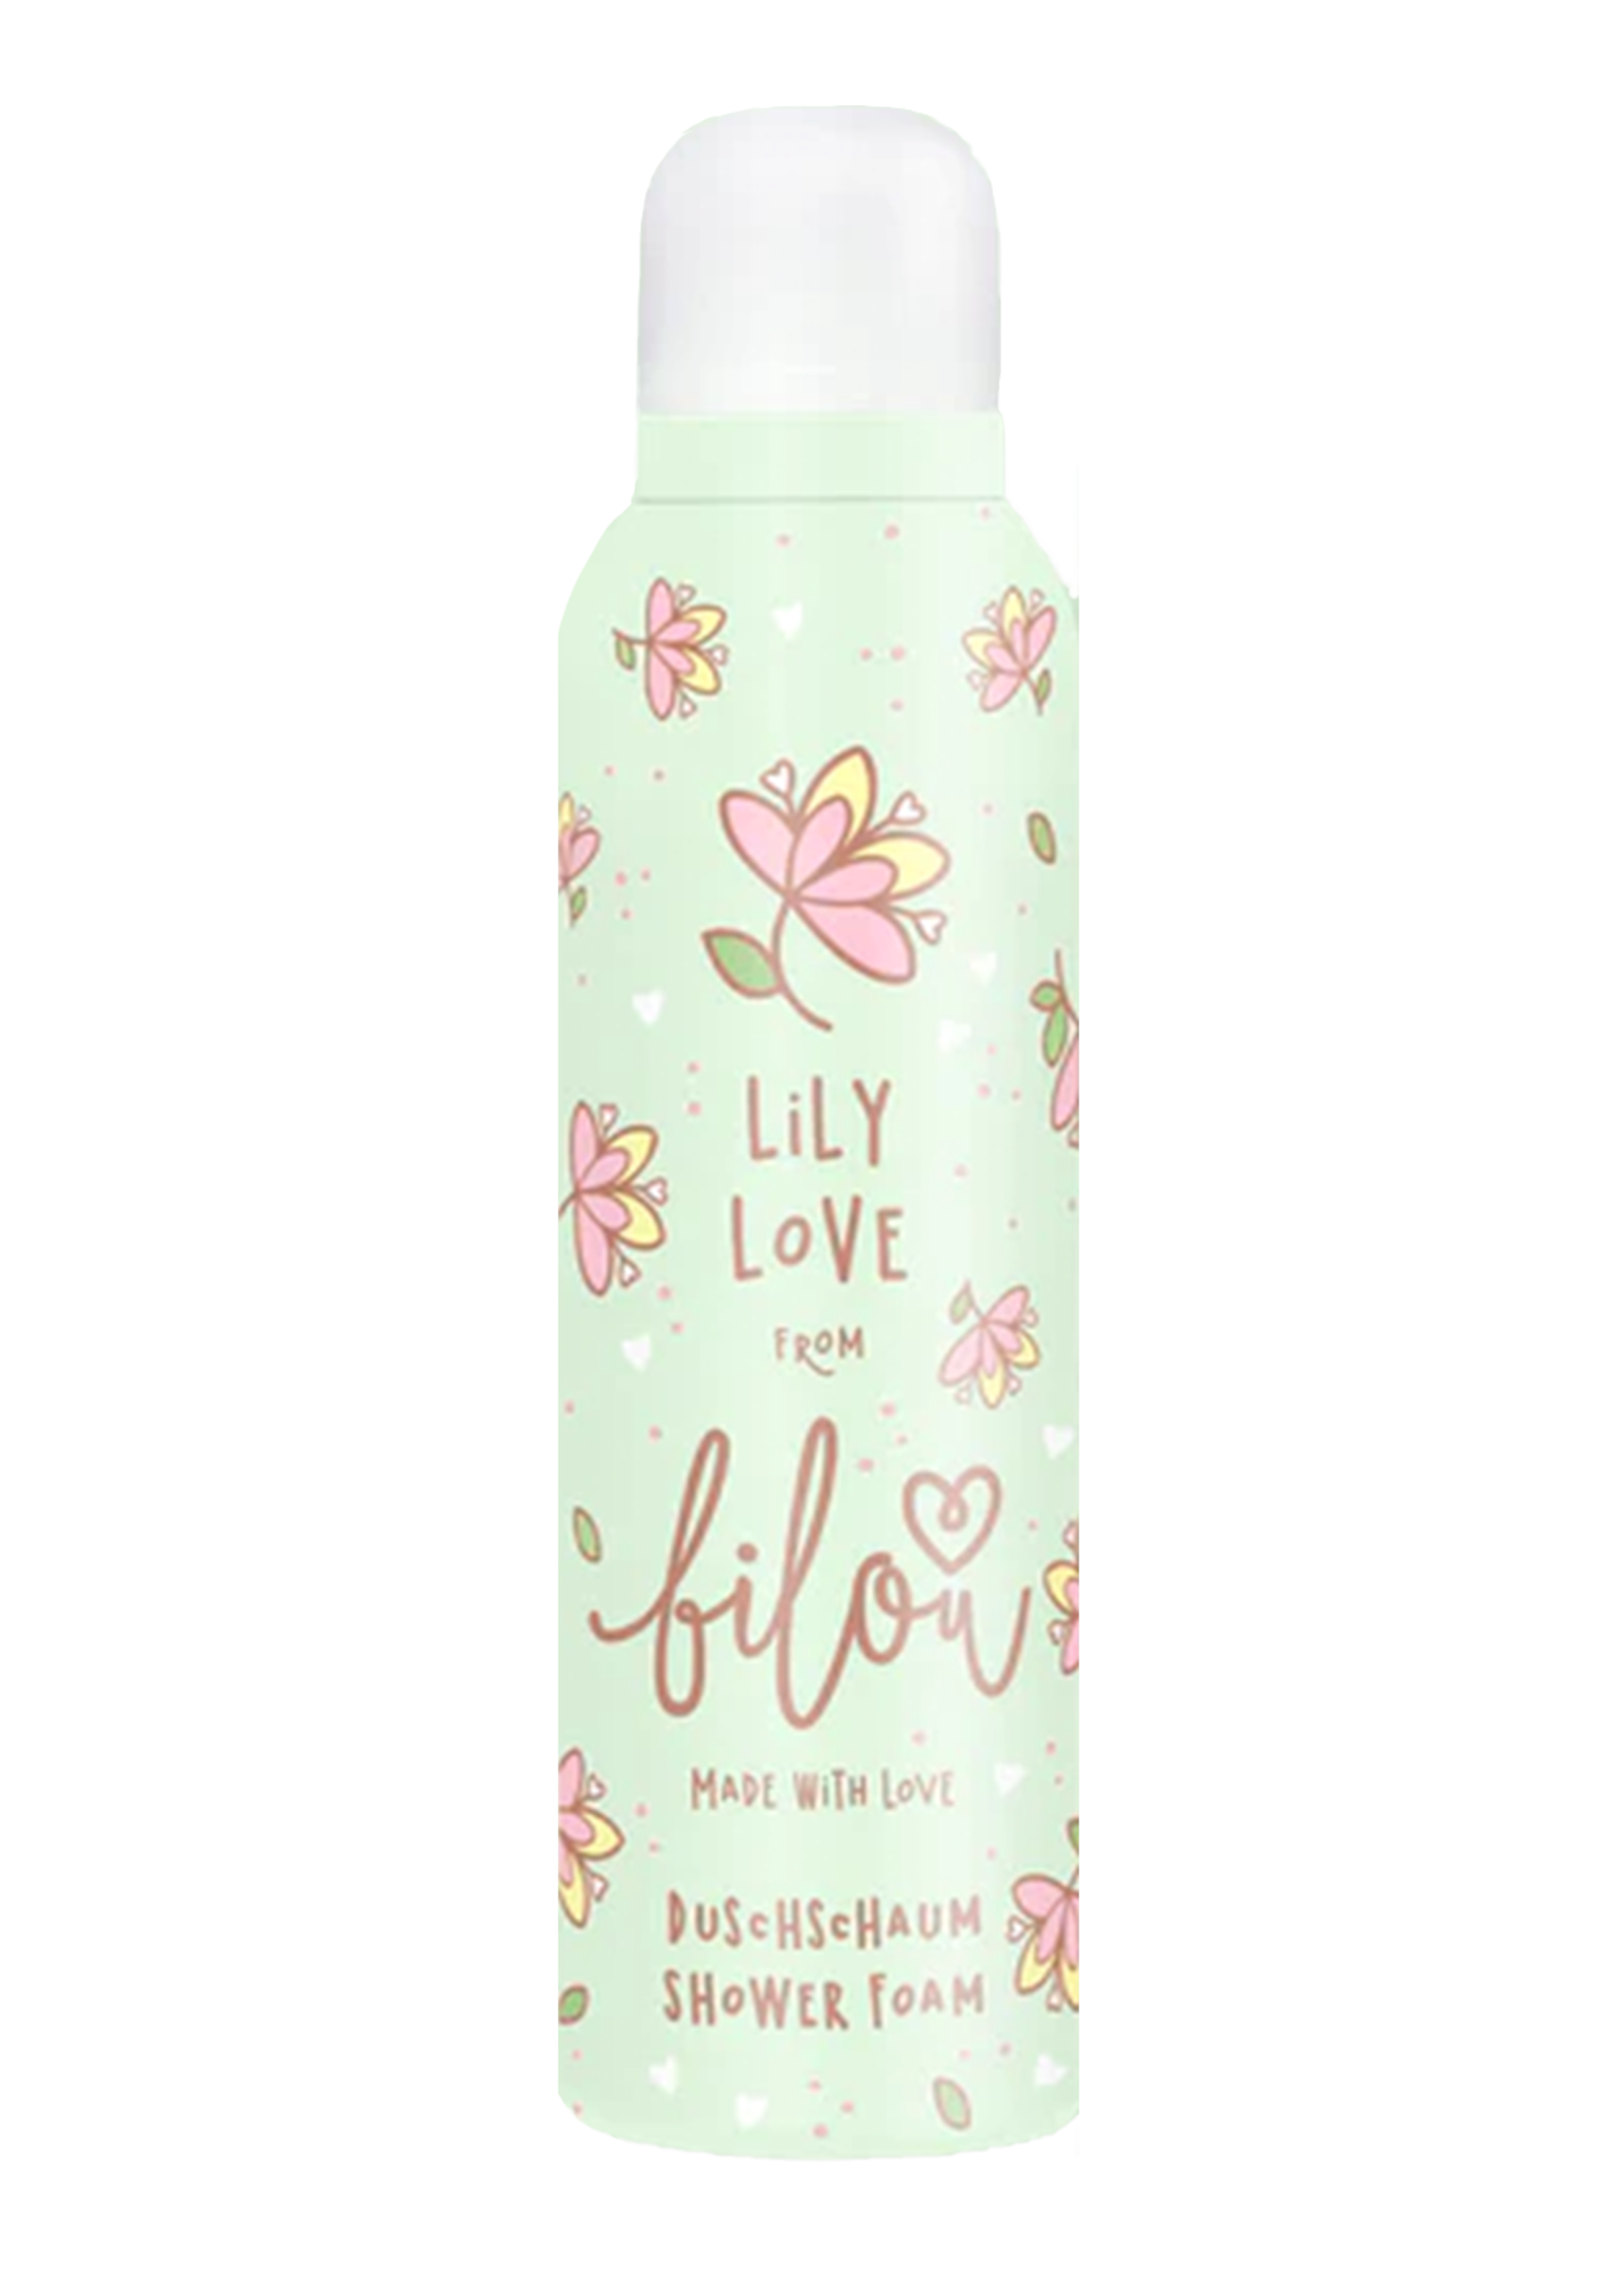 Bilou Bilou Showerfoam Lily Love